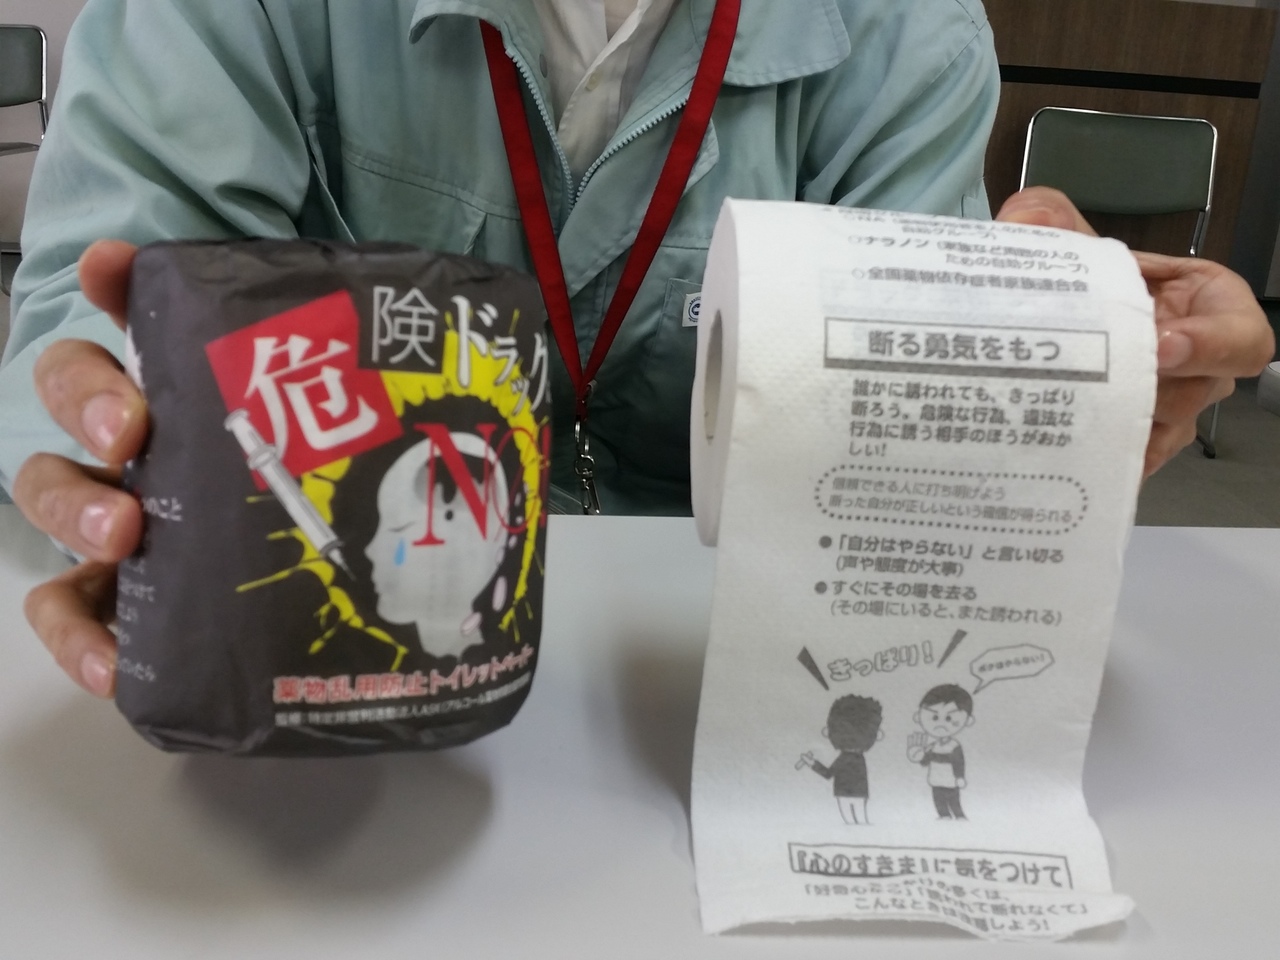 dappo kikken drug danger unsafe japan herb semi-legal toilet paper police promotion